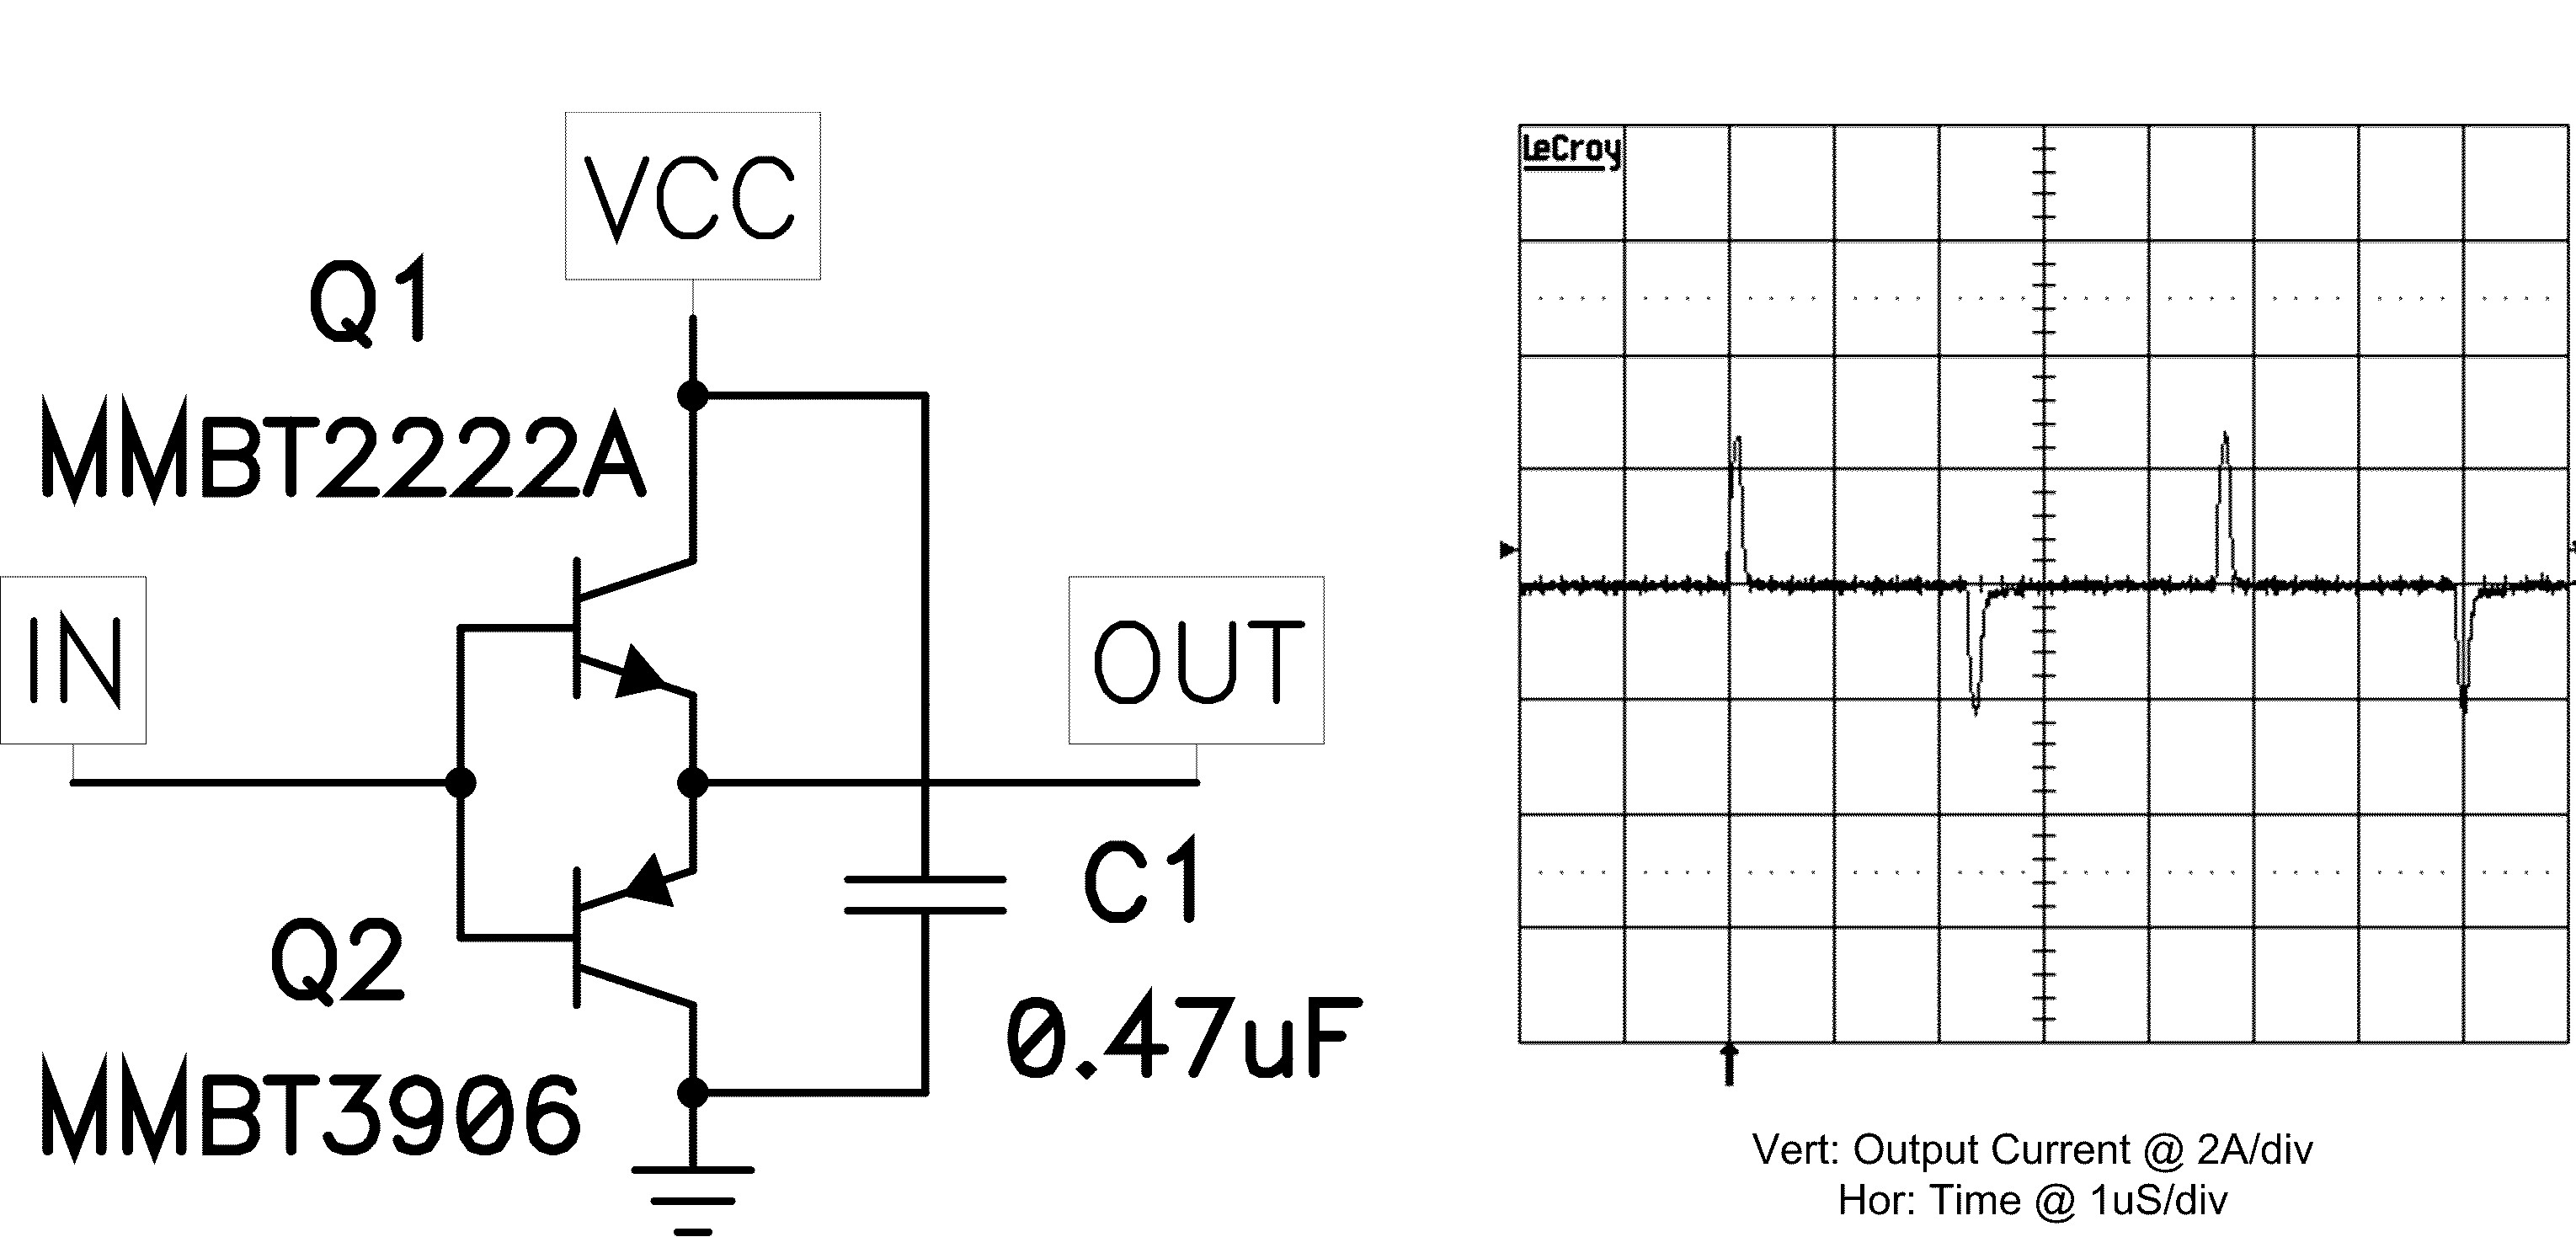 ponent Mosfet Schematic Symbol Transistor Motor Is My H Bridge Design Correct Electrical power circuit